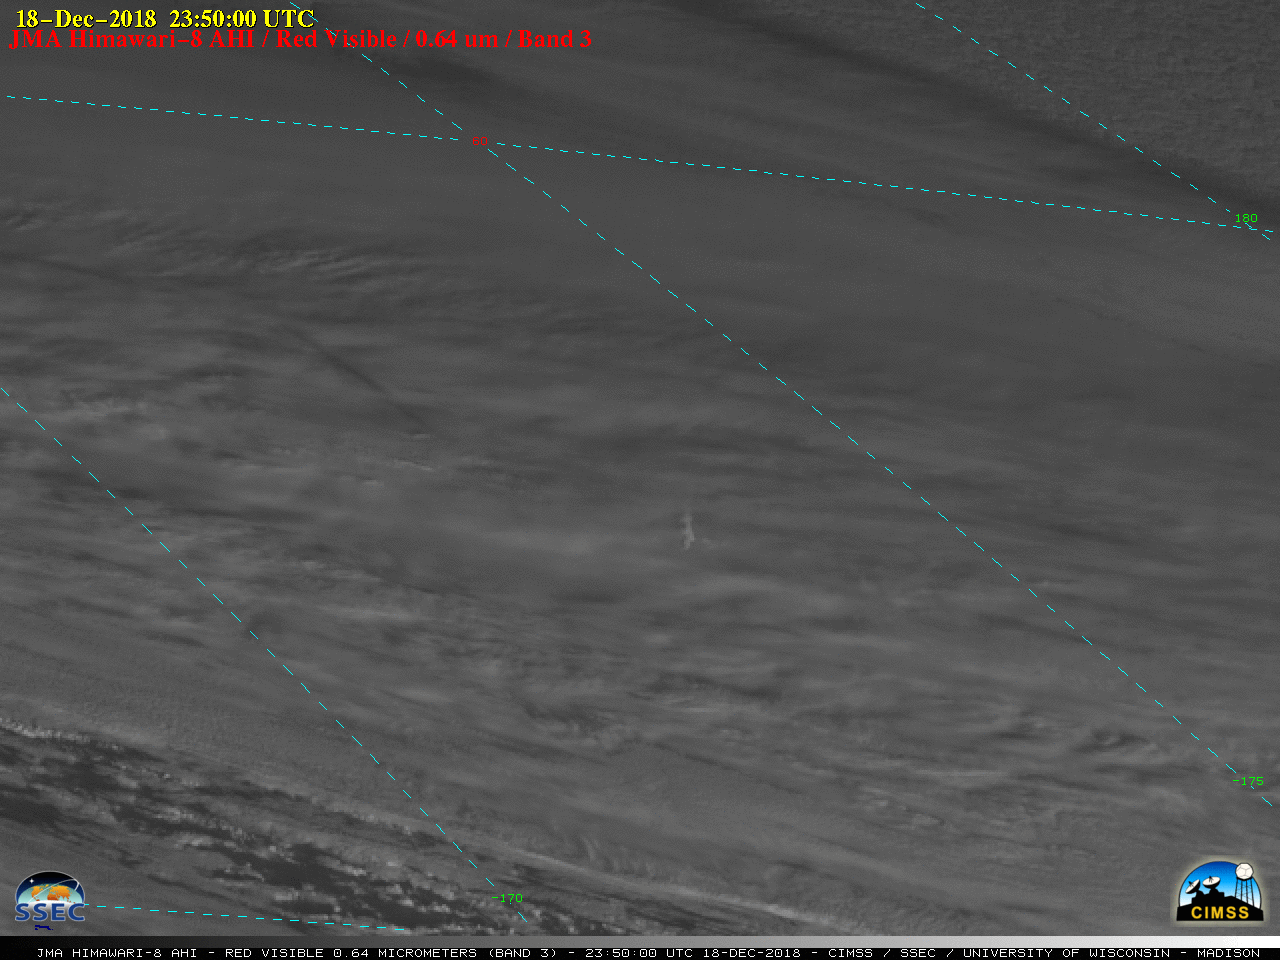 Himawari-8 "Red" Visible (0.64 µm) and Shortwave Infrared (3.9 µm) images at 2350 UTC [click to enlarge]